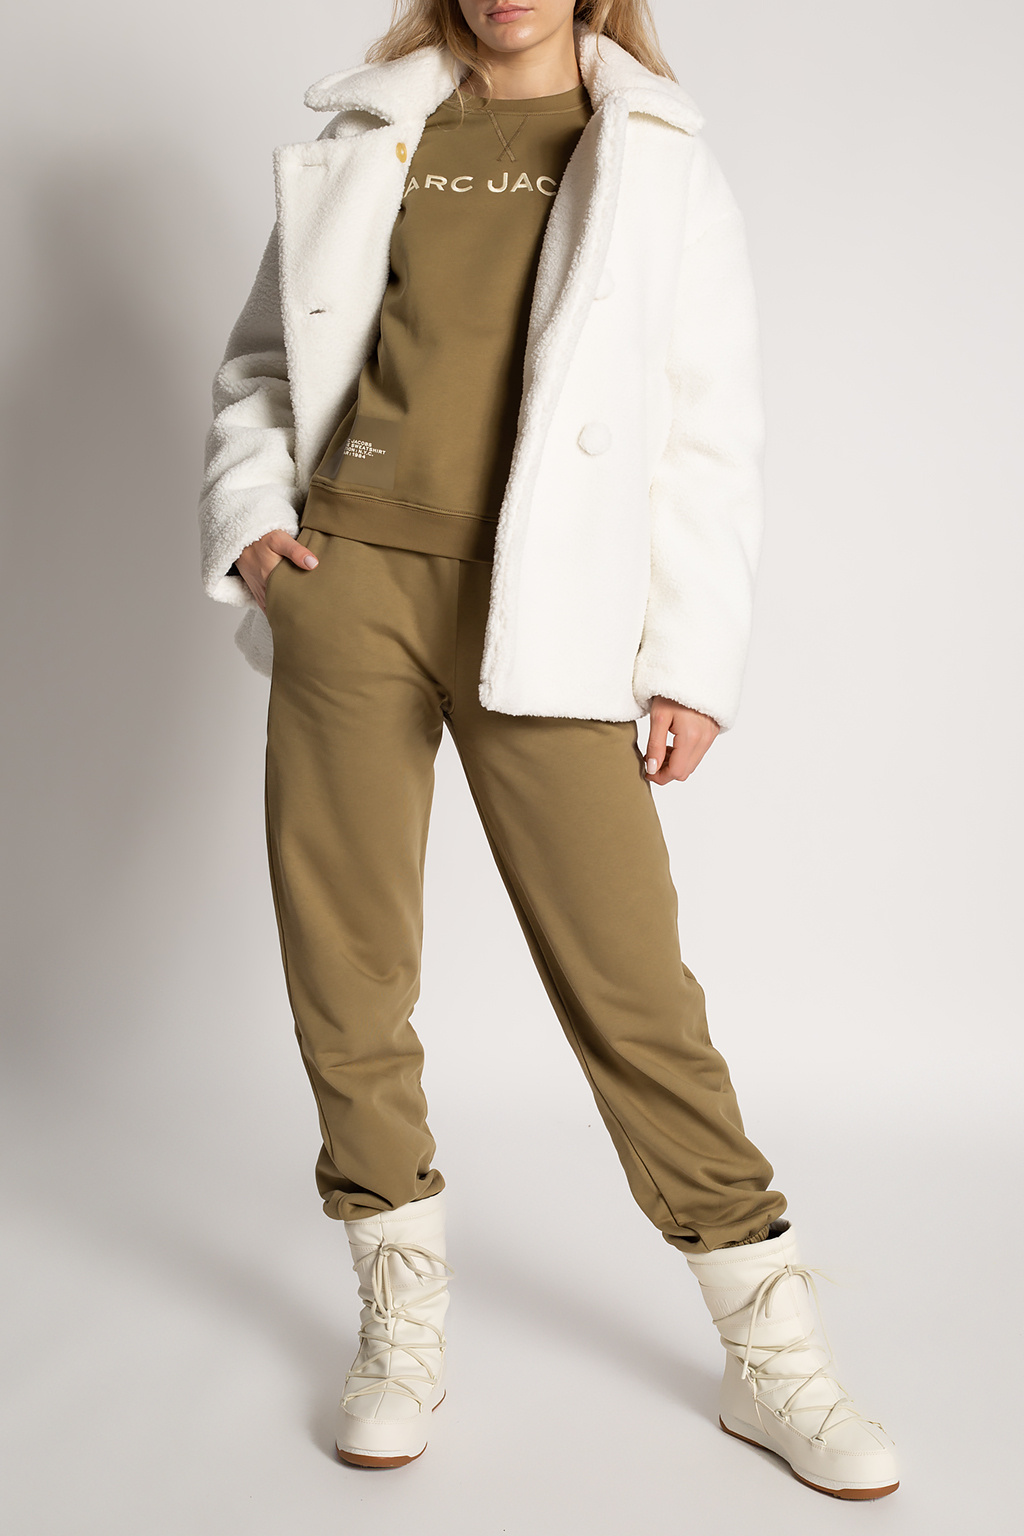 proenza top Schouler White Label Fur coat